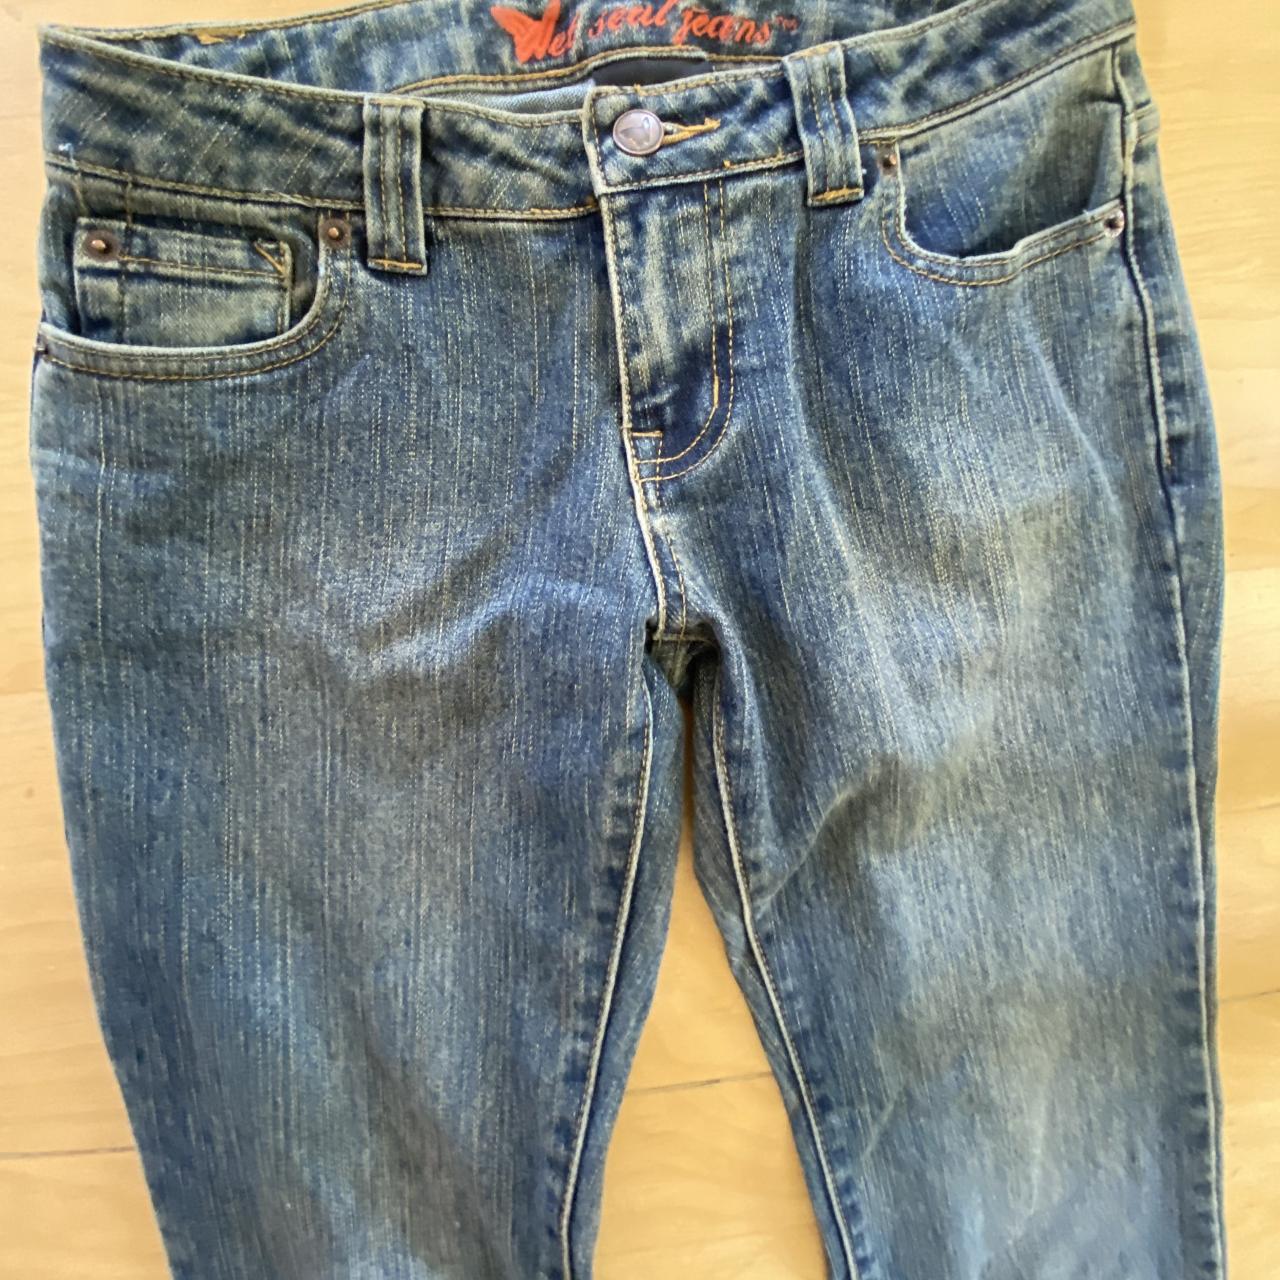 Wet Seal Jeans flared legs skinny jeans - Depop